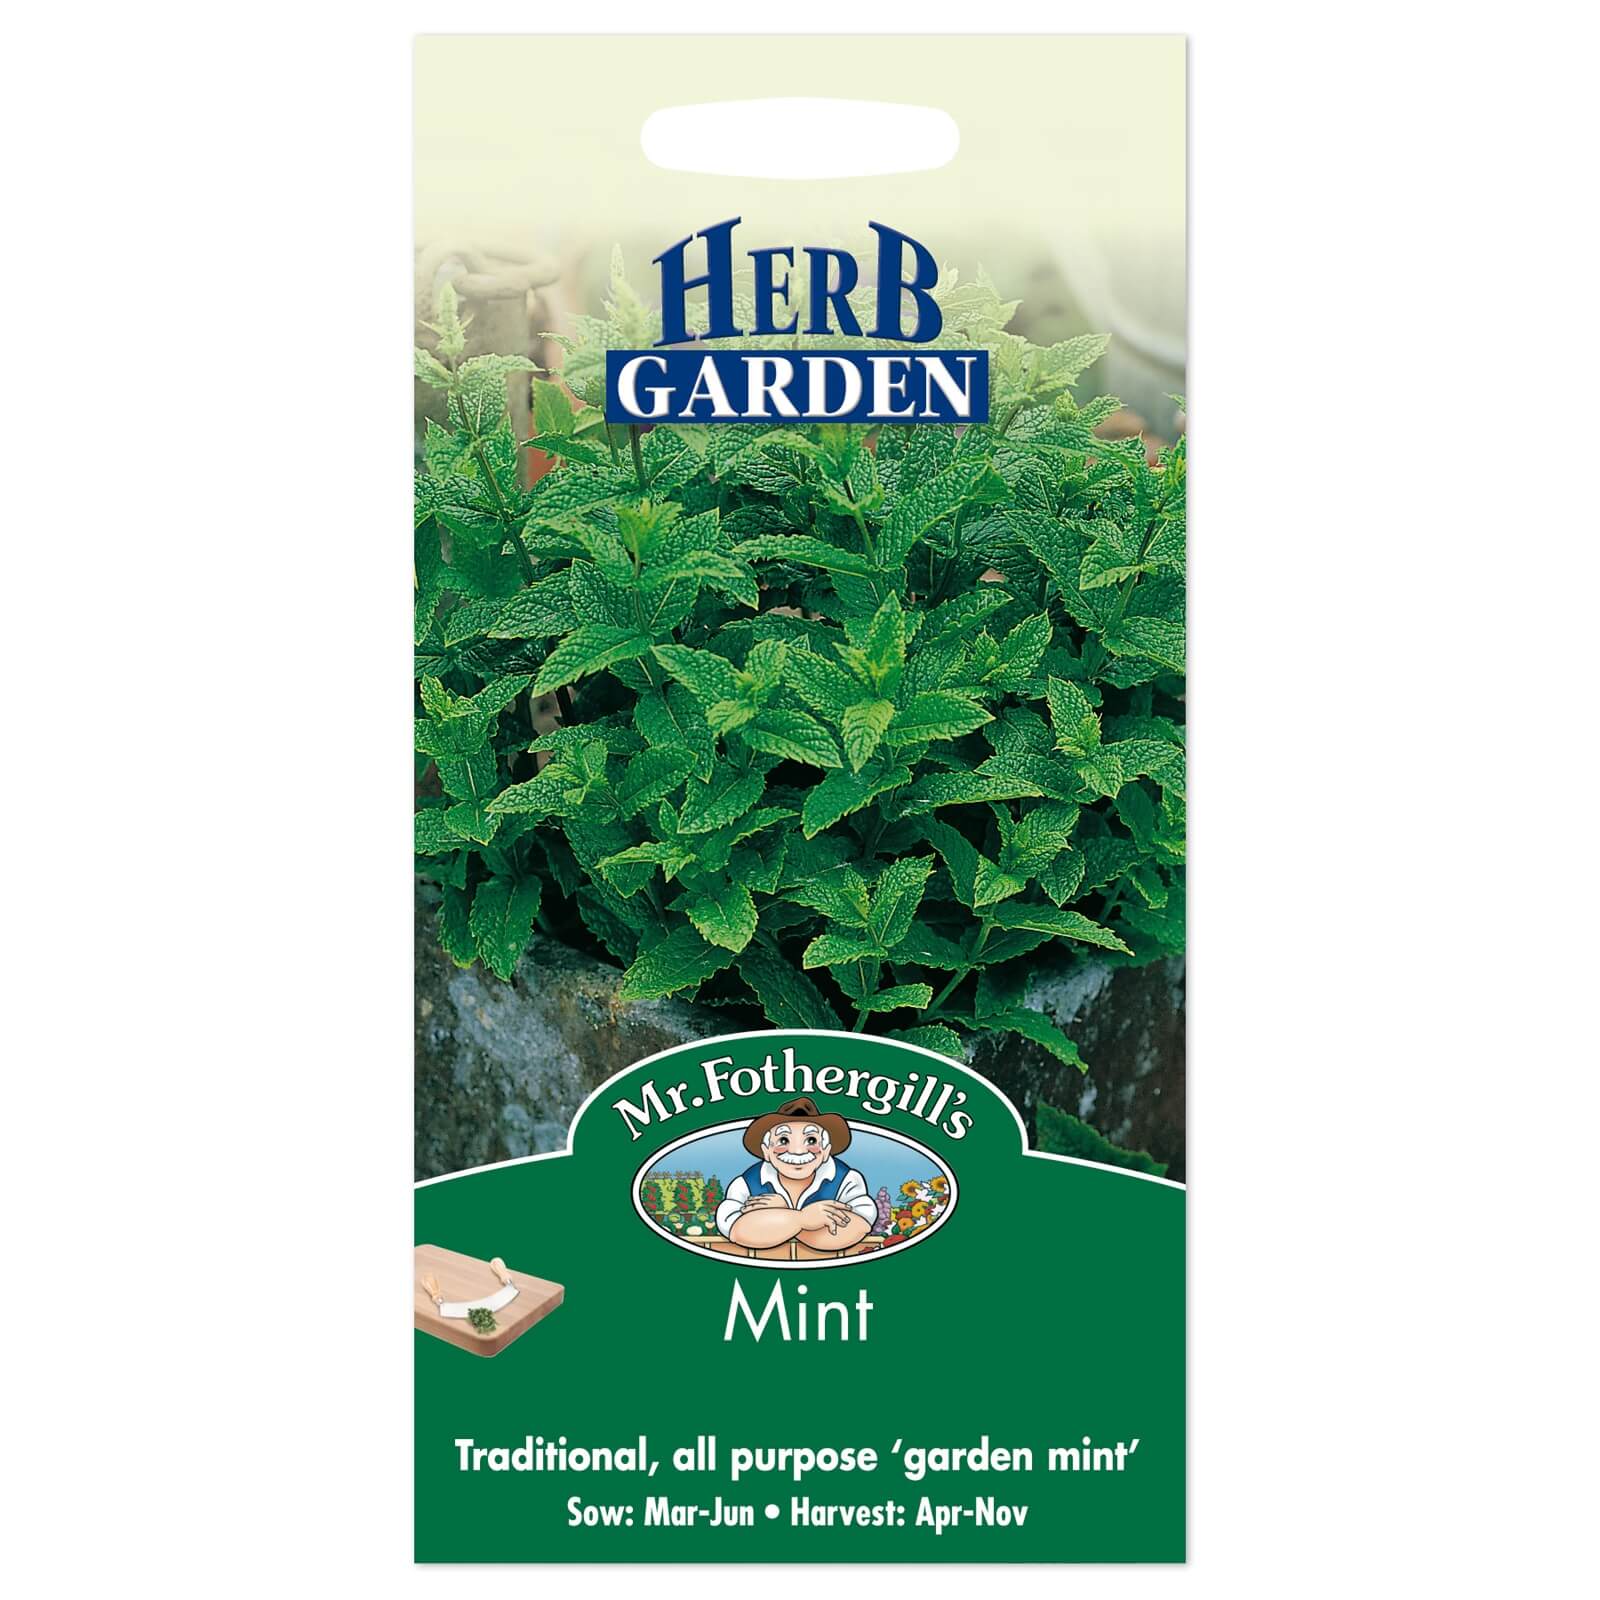 Mr. Fothergill's Mint Seeds